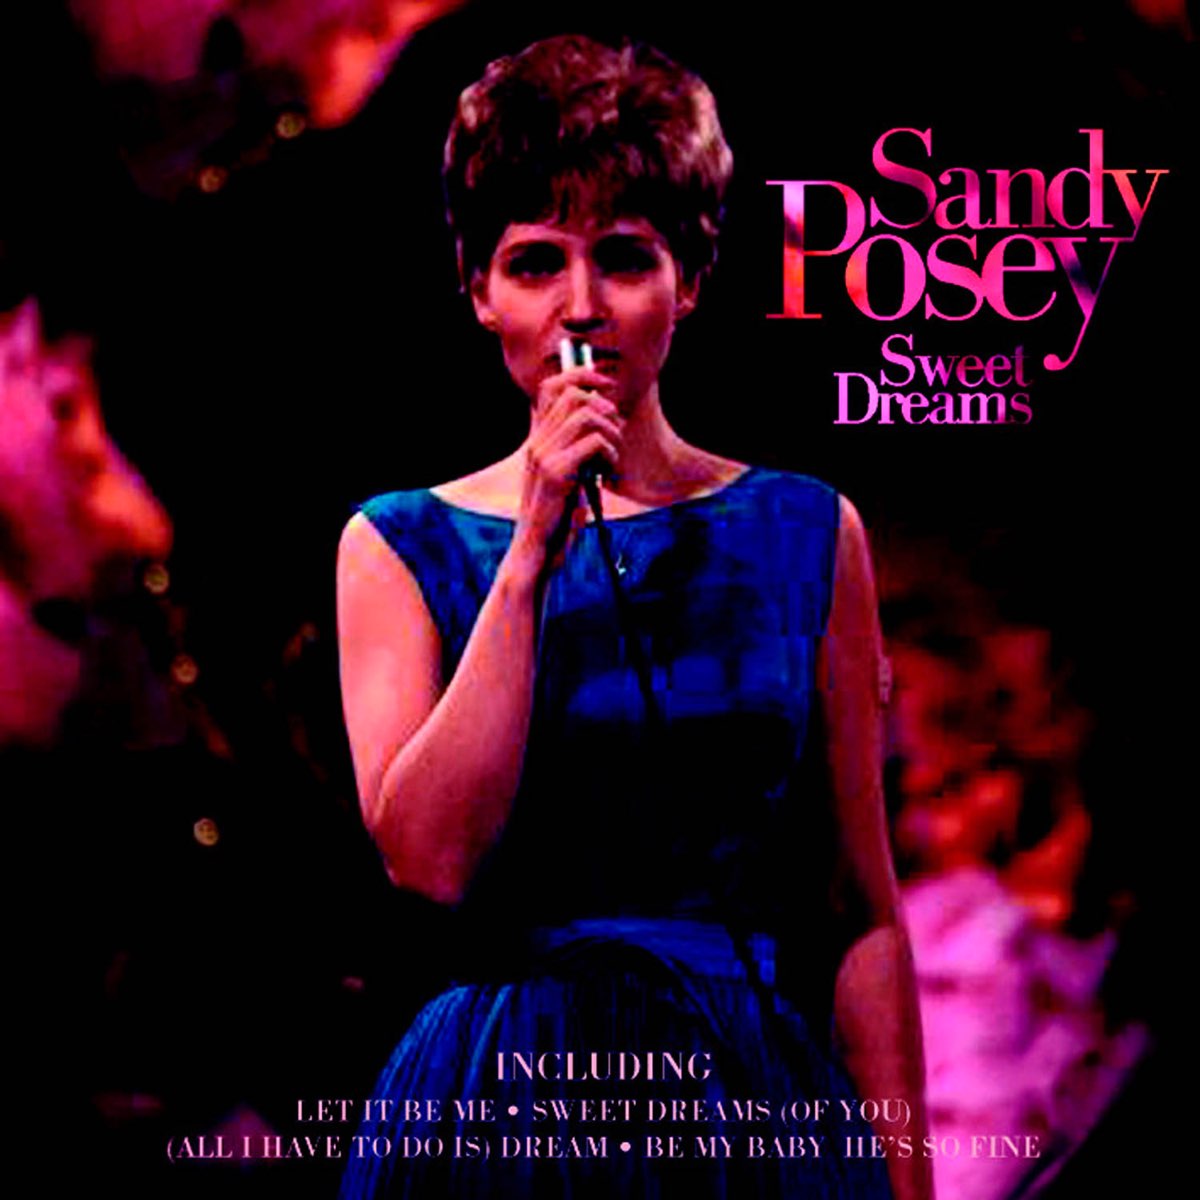 ‎sweet Dreams By Sandy Posey On Apple Music